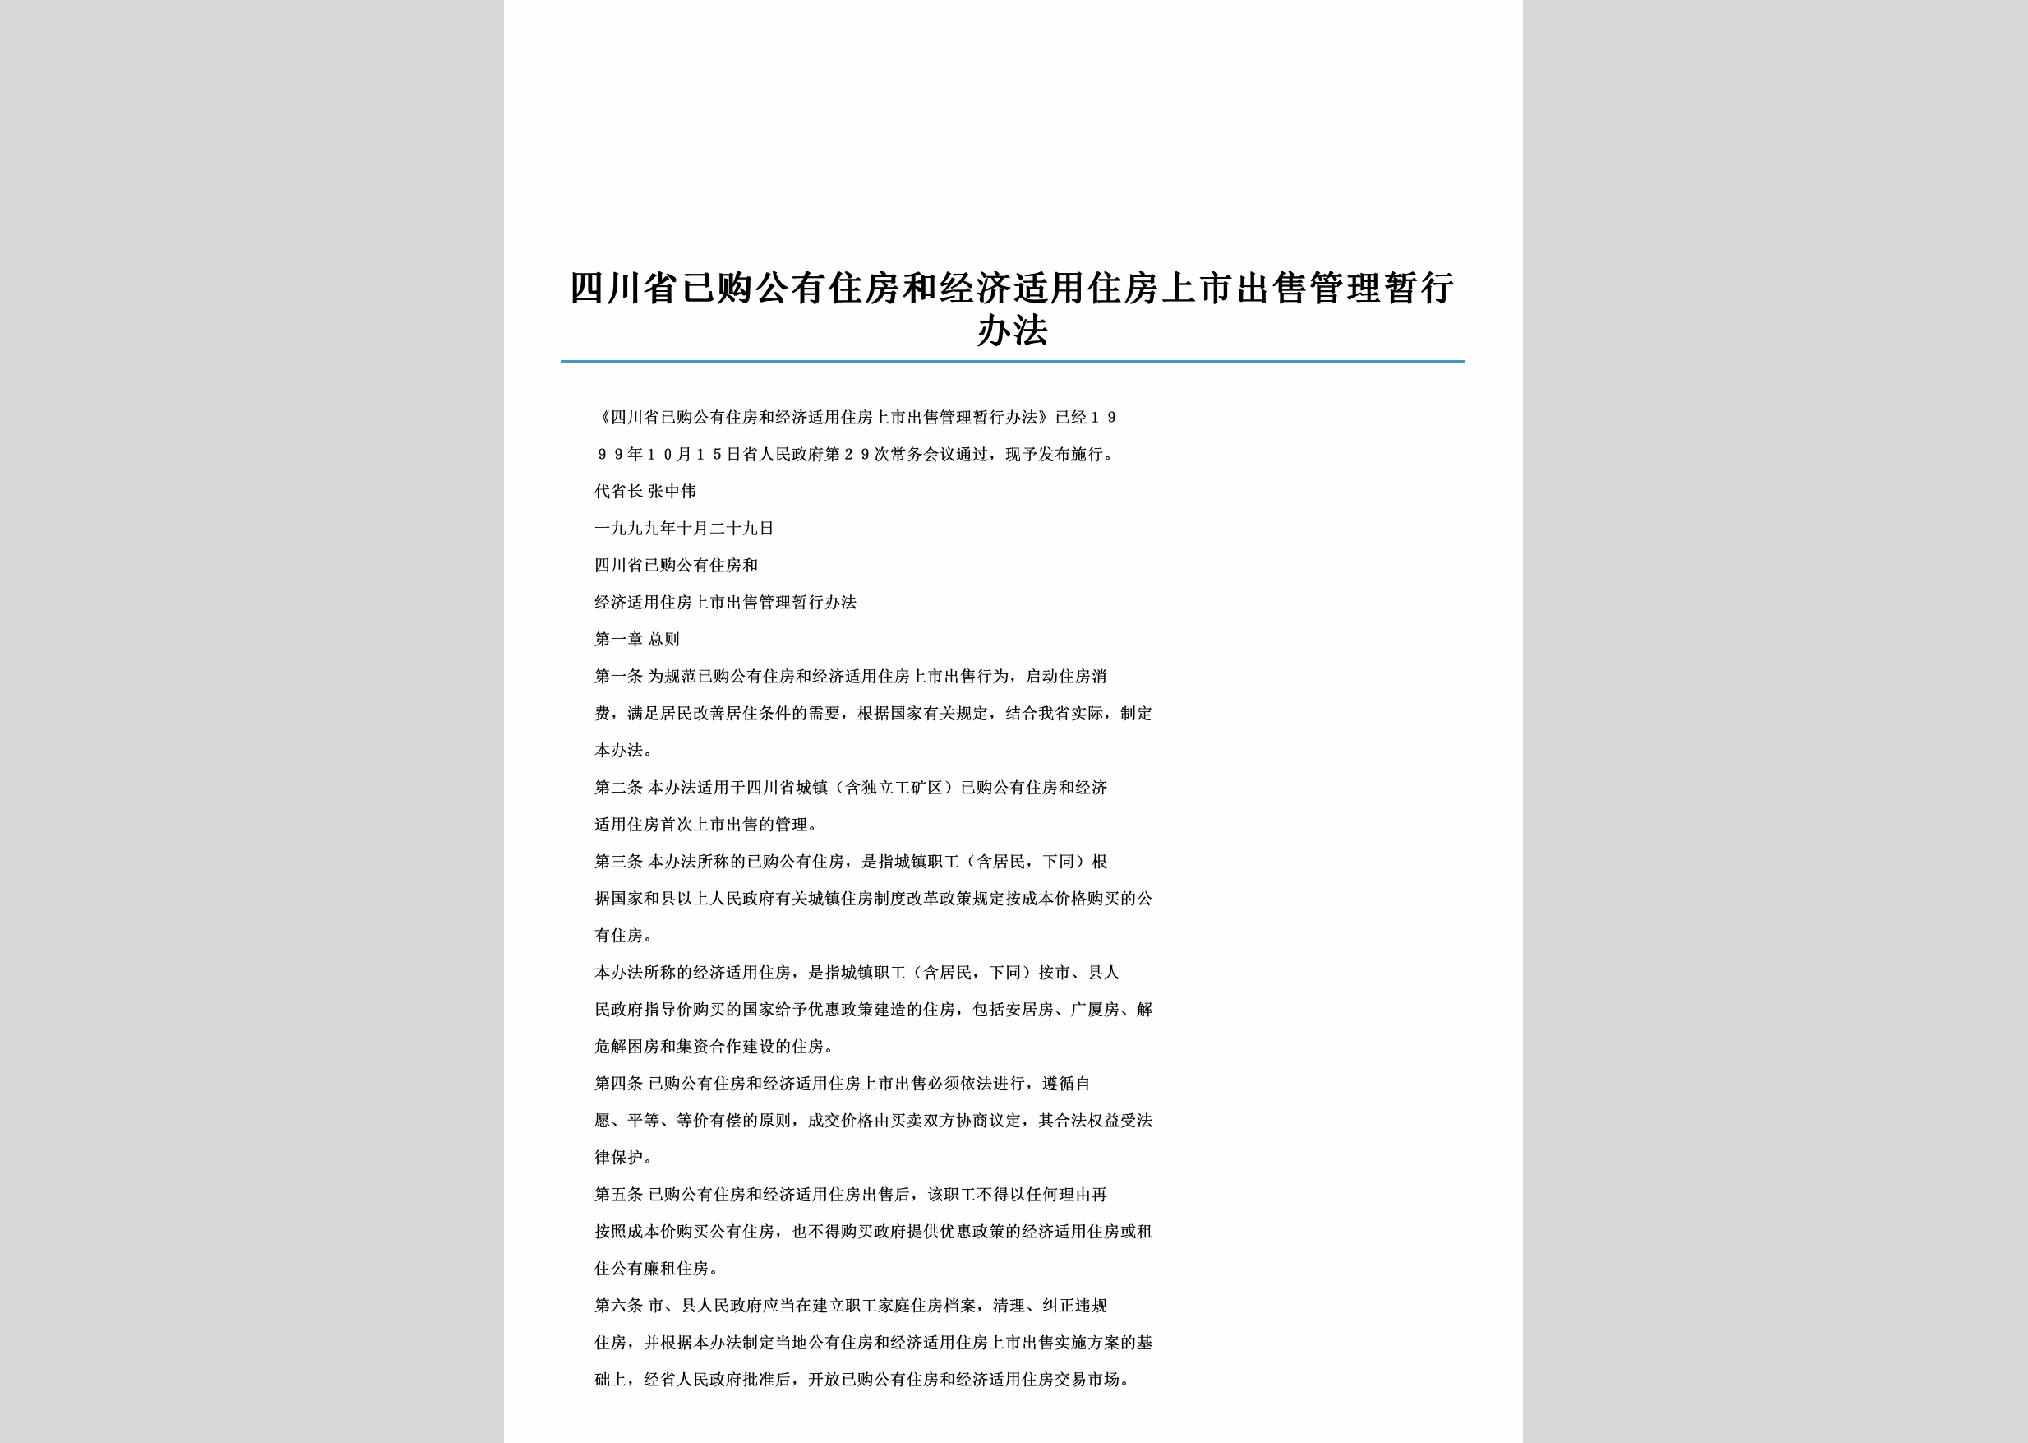 SC-ZFCSGLBF-1999：四川省已购公有住房和经济适用住房上市出售管理暂行办法